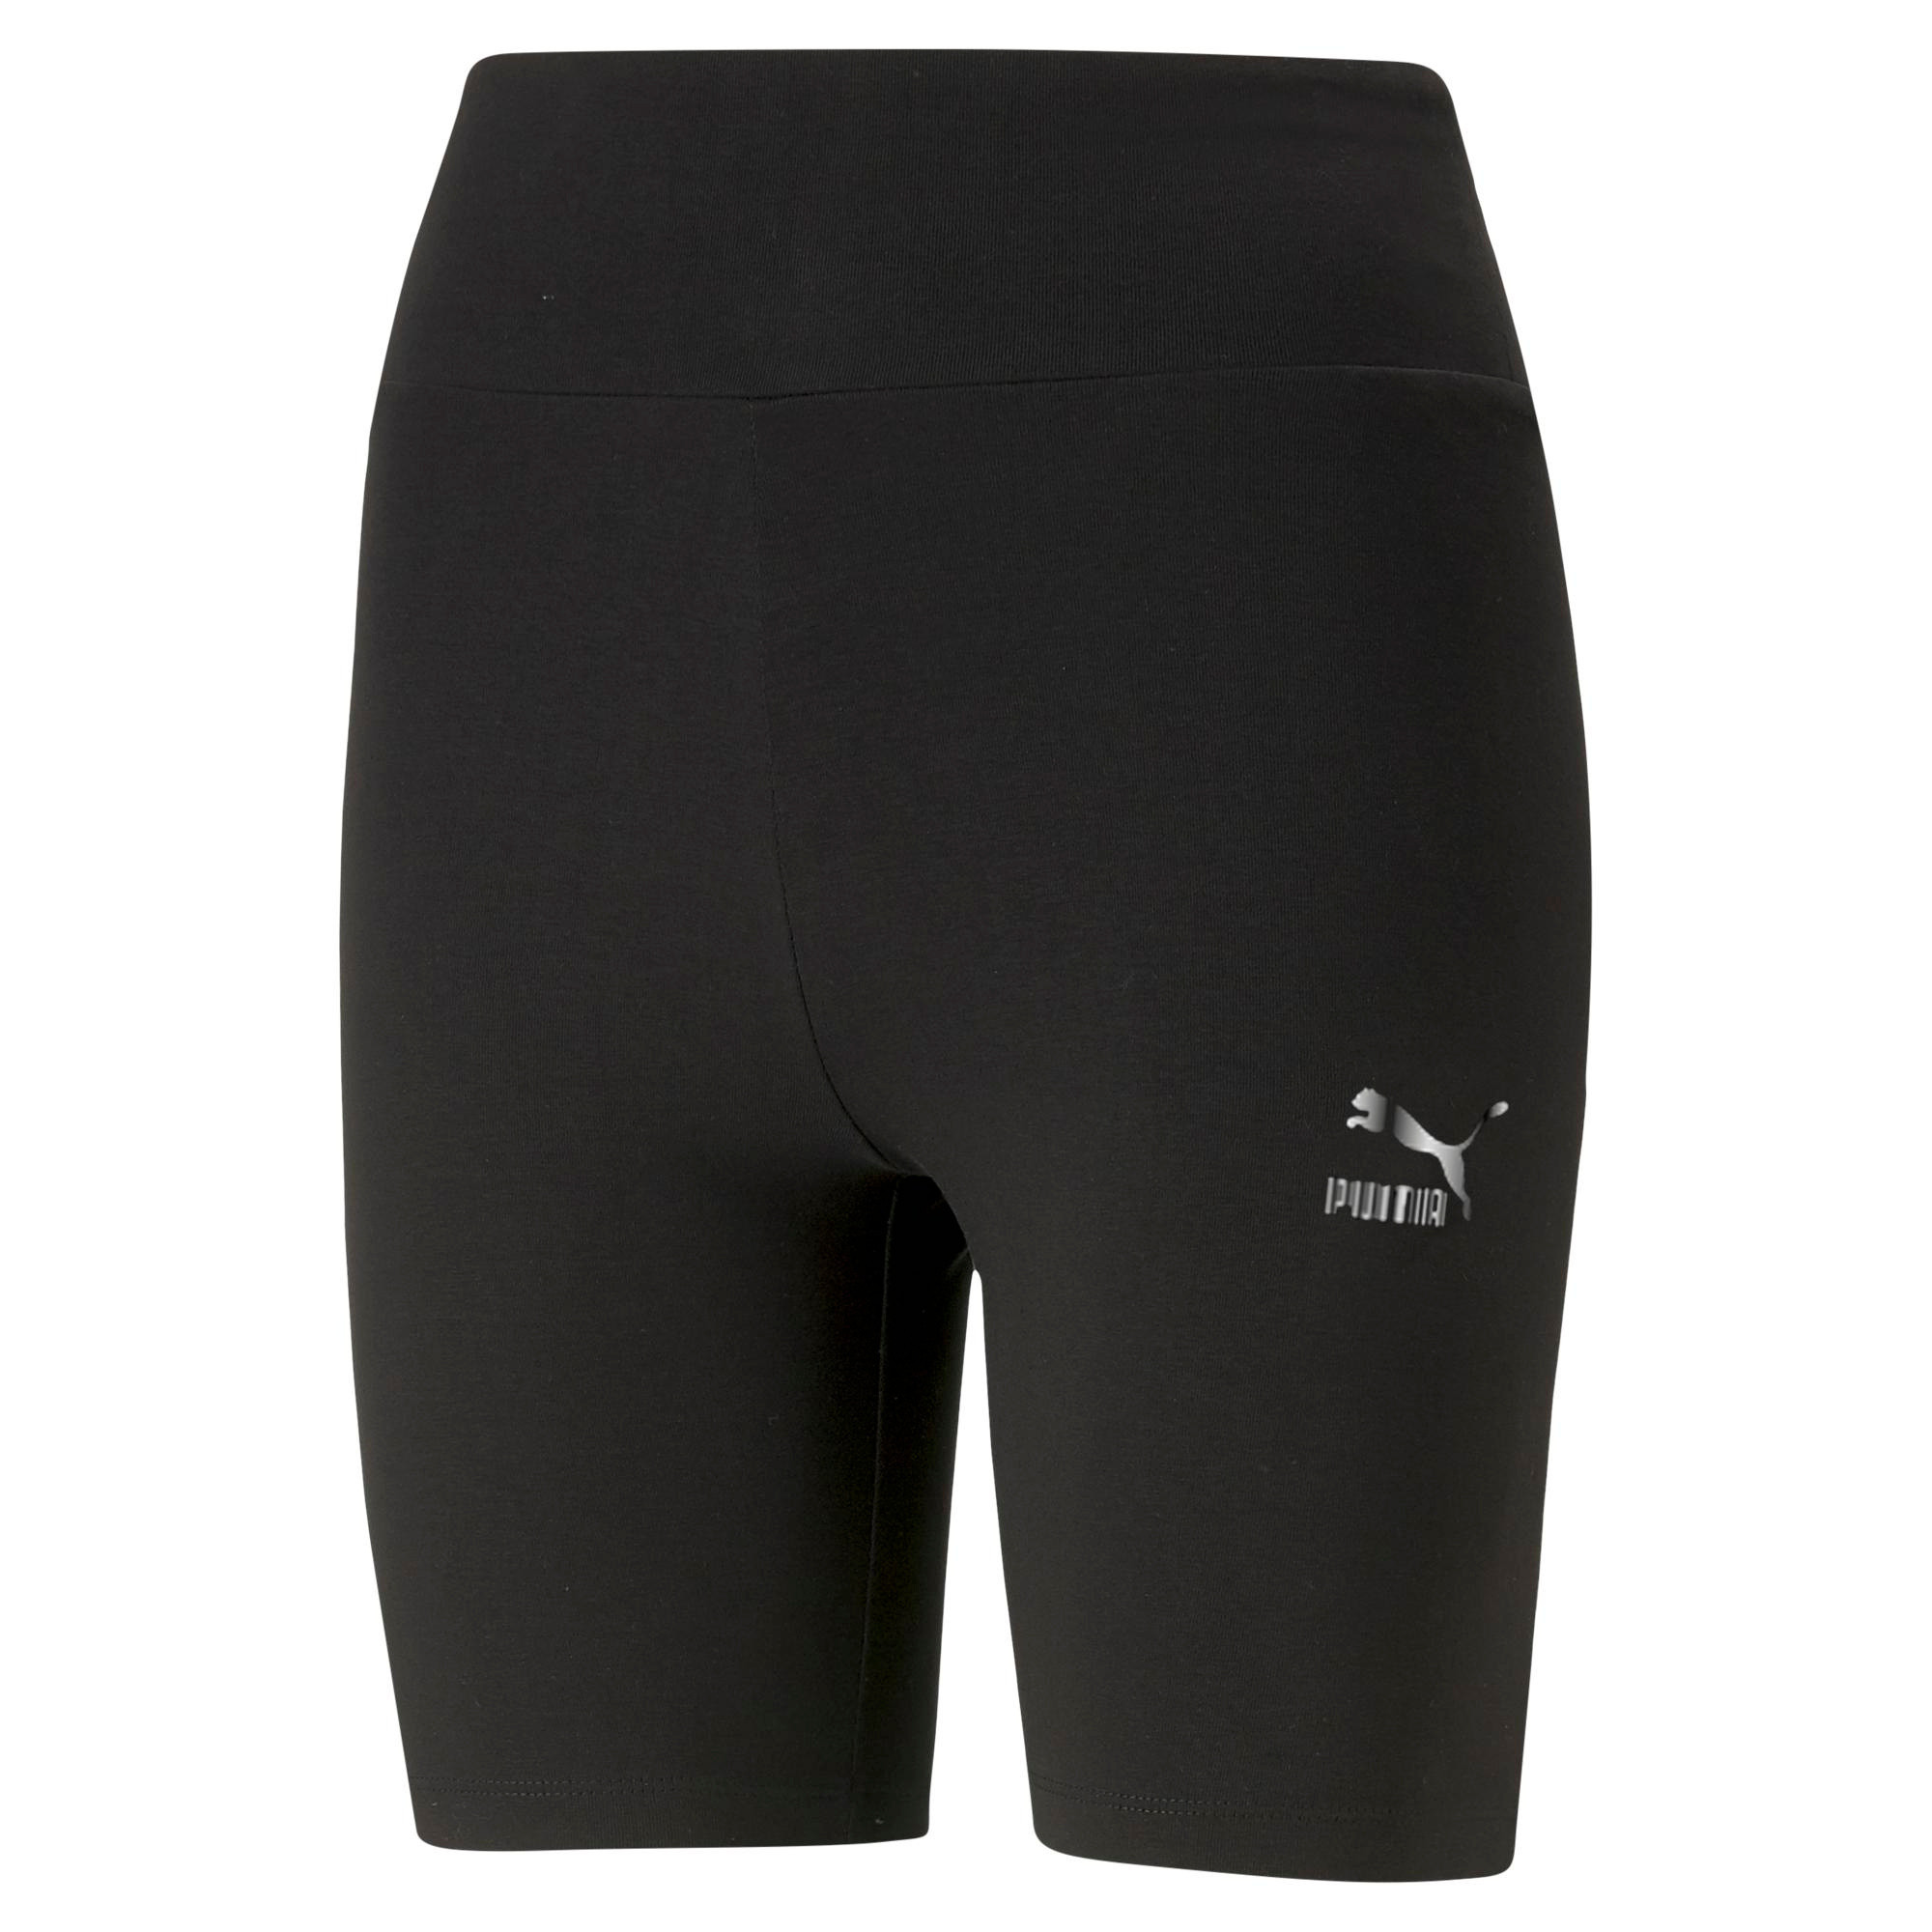 Puma - Cycling shorts, Black, large image number 0